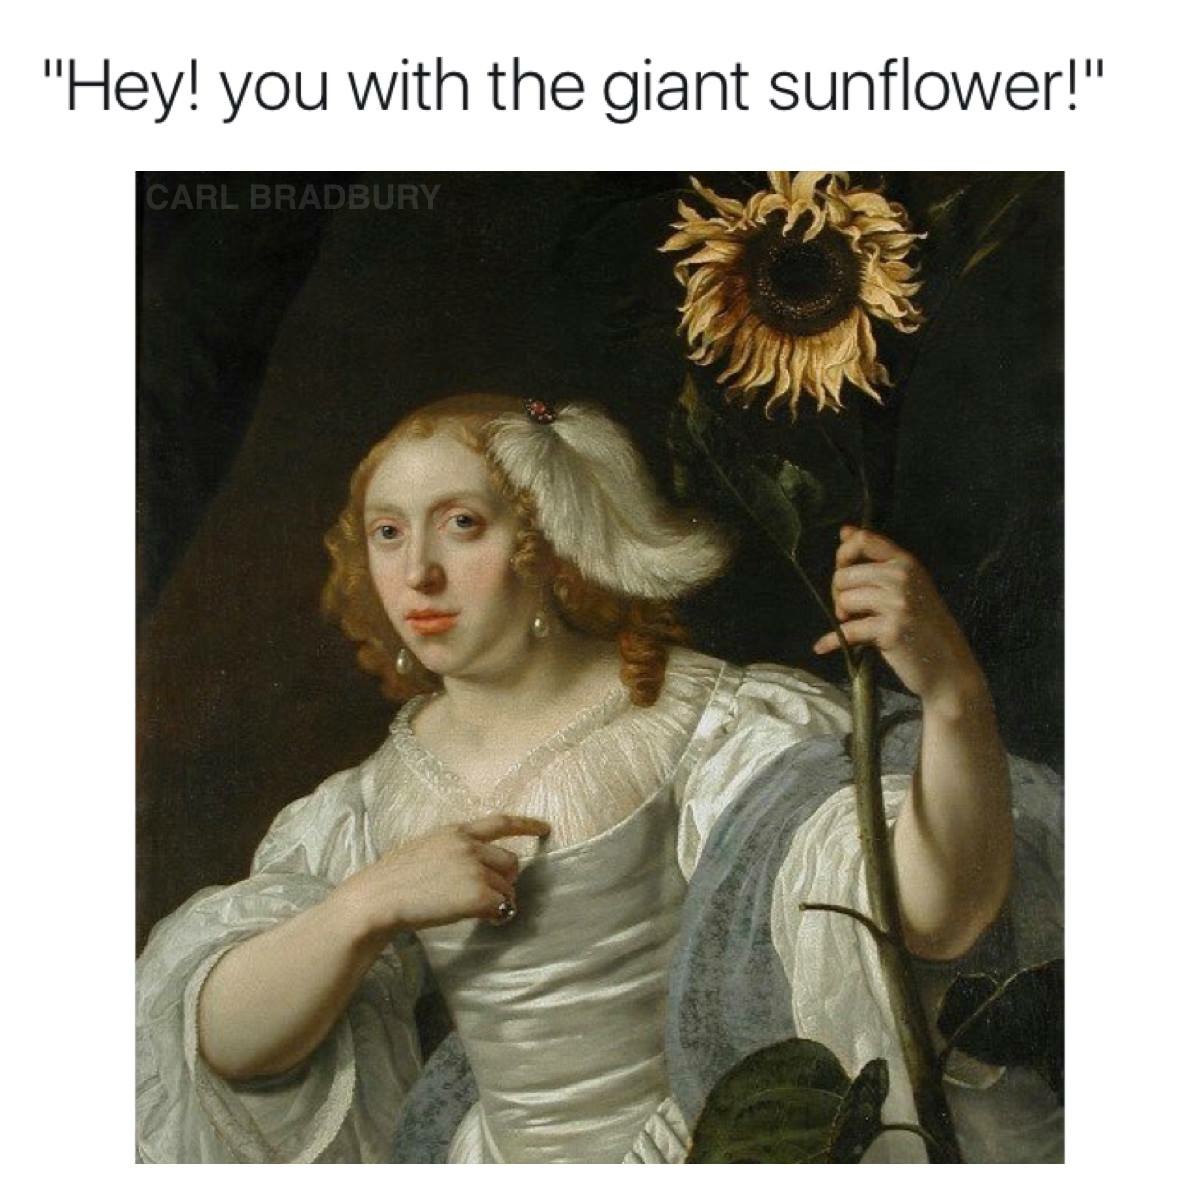 giant sunflower meme - "Hey! you with the giant sunflower!" Carl Bradbury